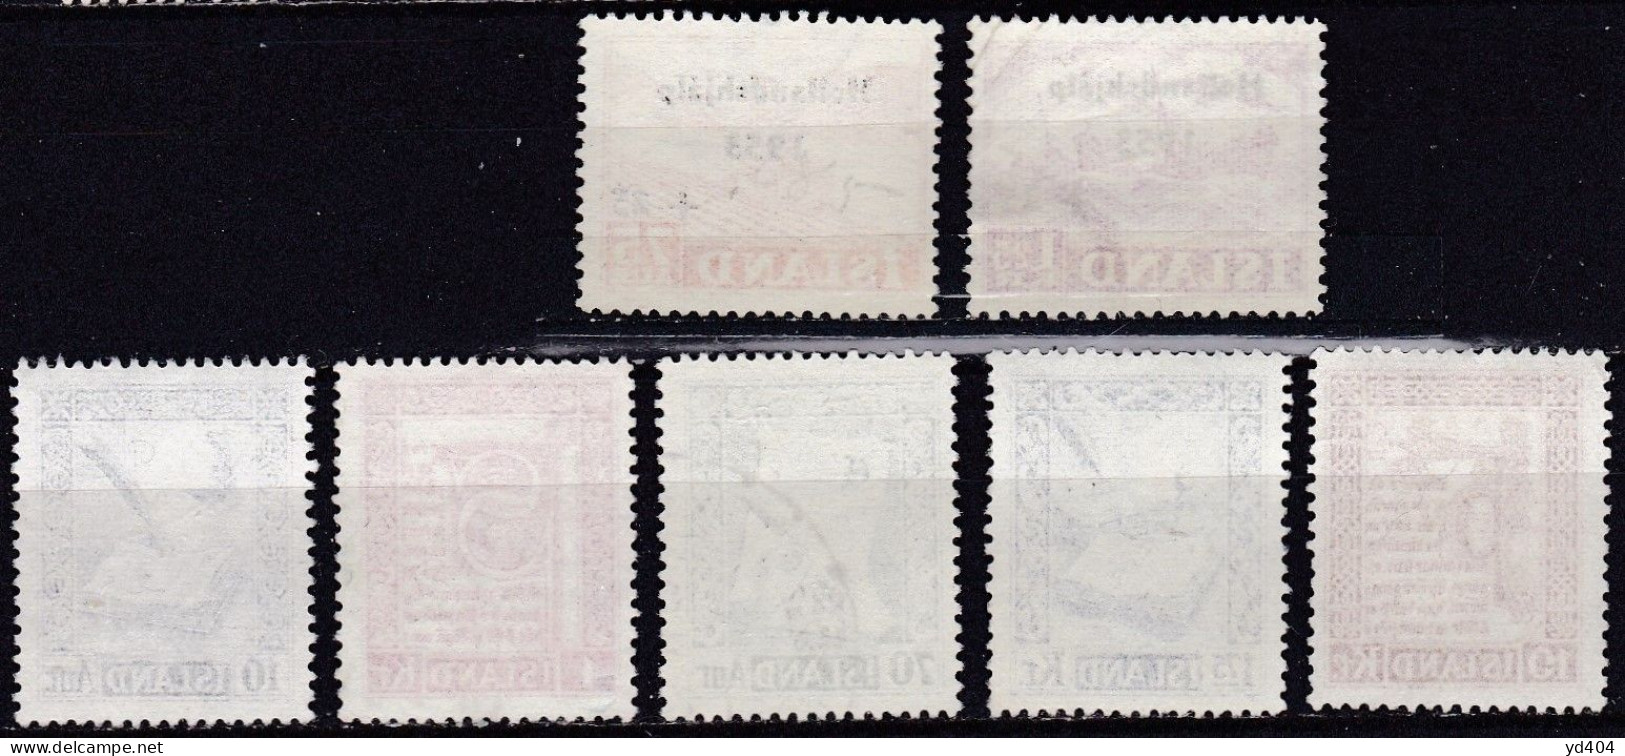 IS058 – ISLANDE – ICELAND – 1953 – FULL YEAR SET – SC # 278/82-B12/3 - USED 13,50 € - Oblitérés